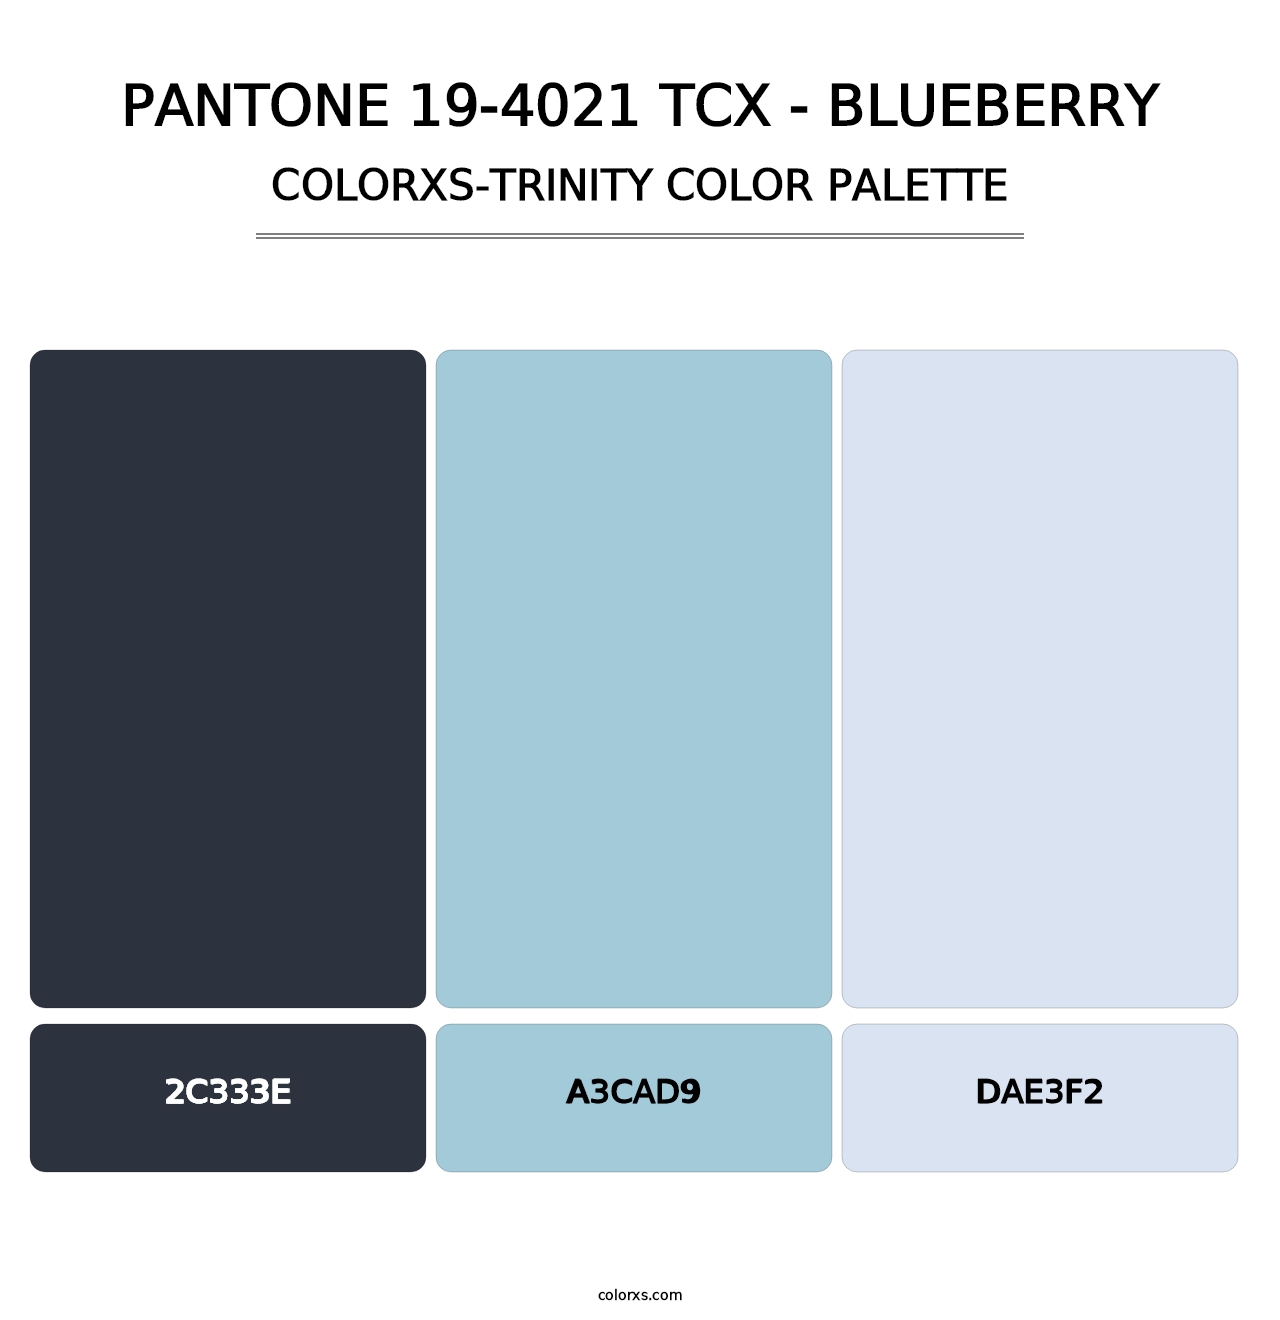 PANTONE 19-4021 TCX - Blueberry - Colorxs Trinity Palette